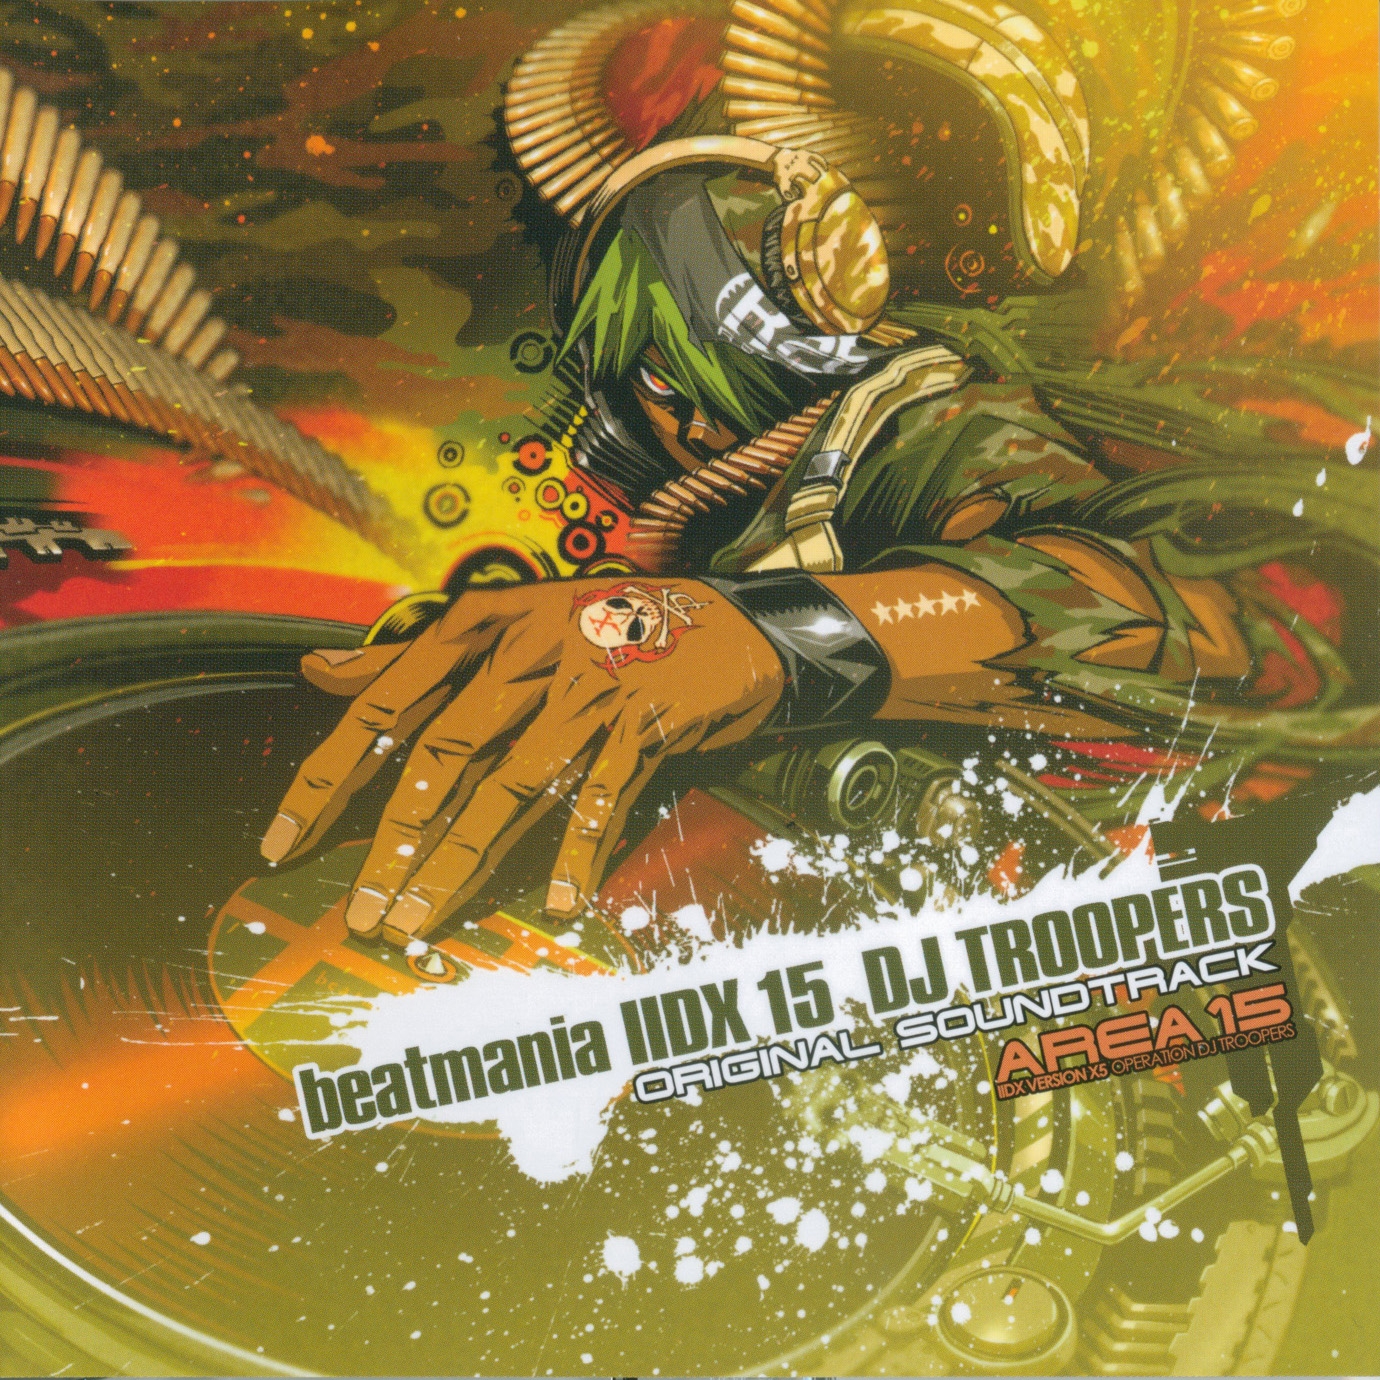 beatmania IIDX 15 DJ TROOPERS ORIGINAL SOUNDTRACK (2008) MP3 